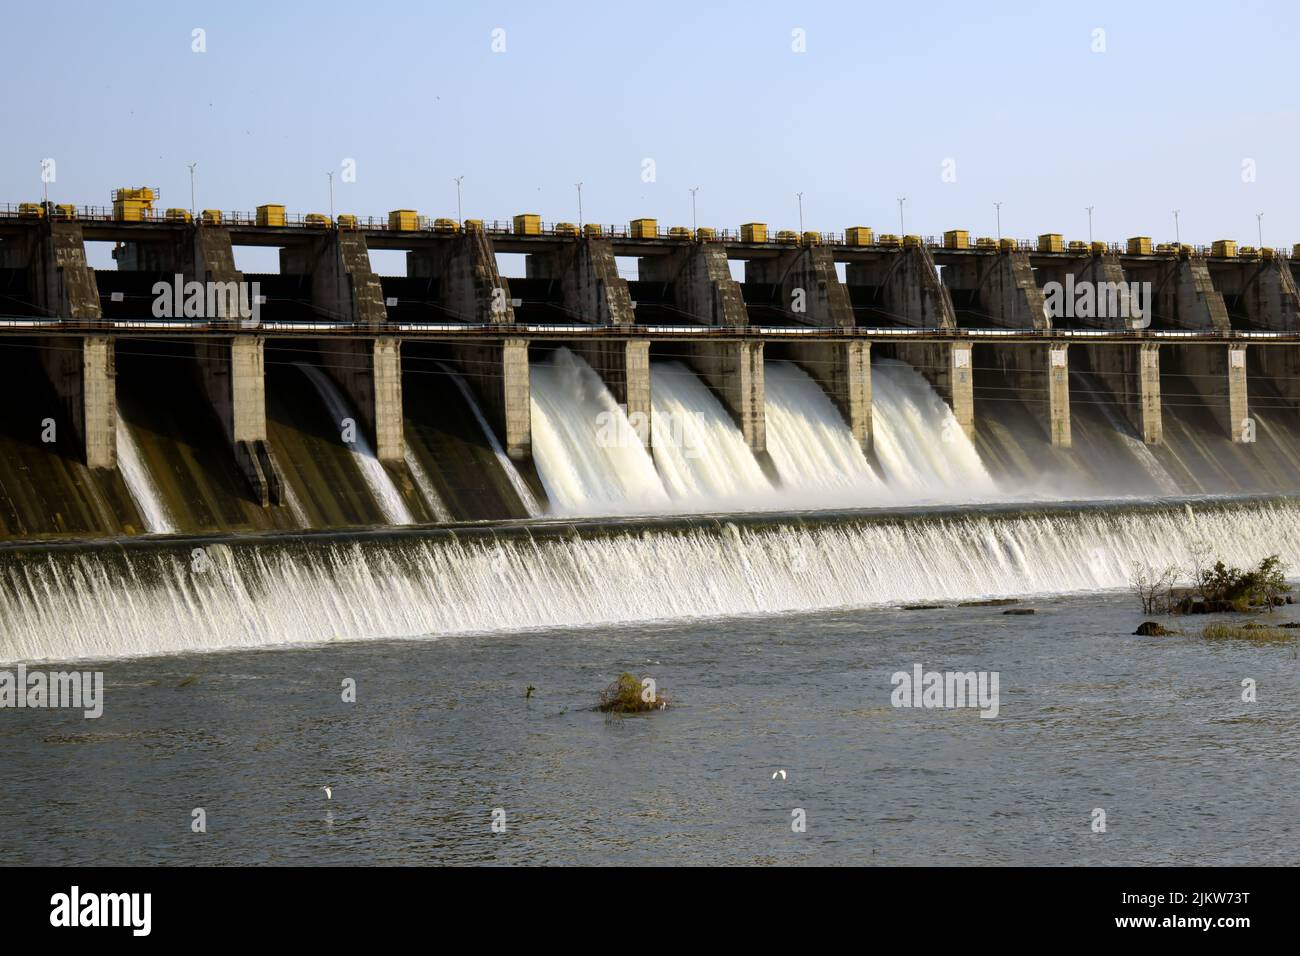 Massive Waghur Dam Infrastruktur Jalgaon Maharashtra Indien, 4 Tore des Dam waren offen Stockfoto